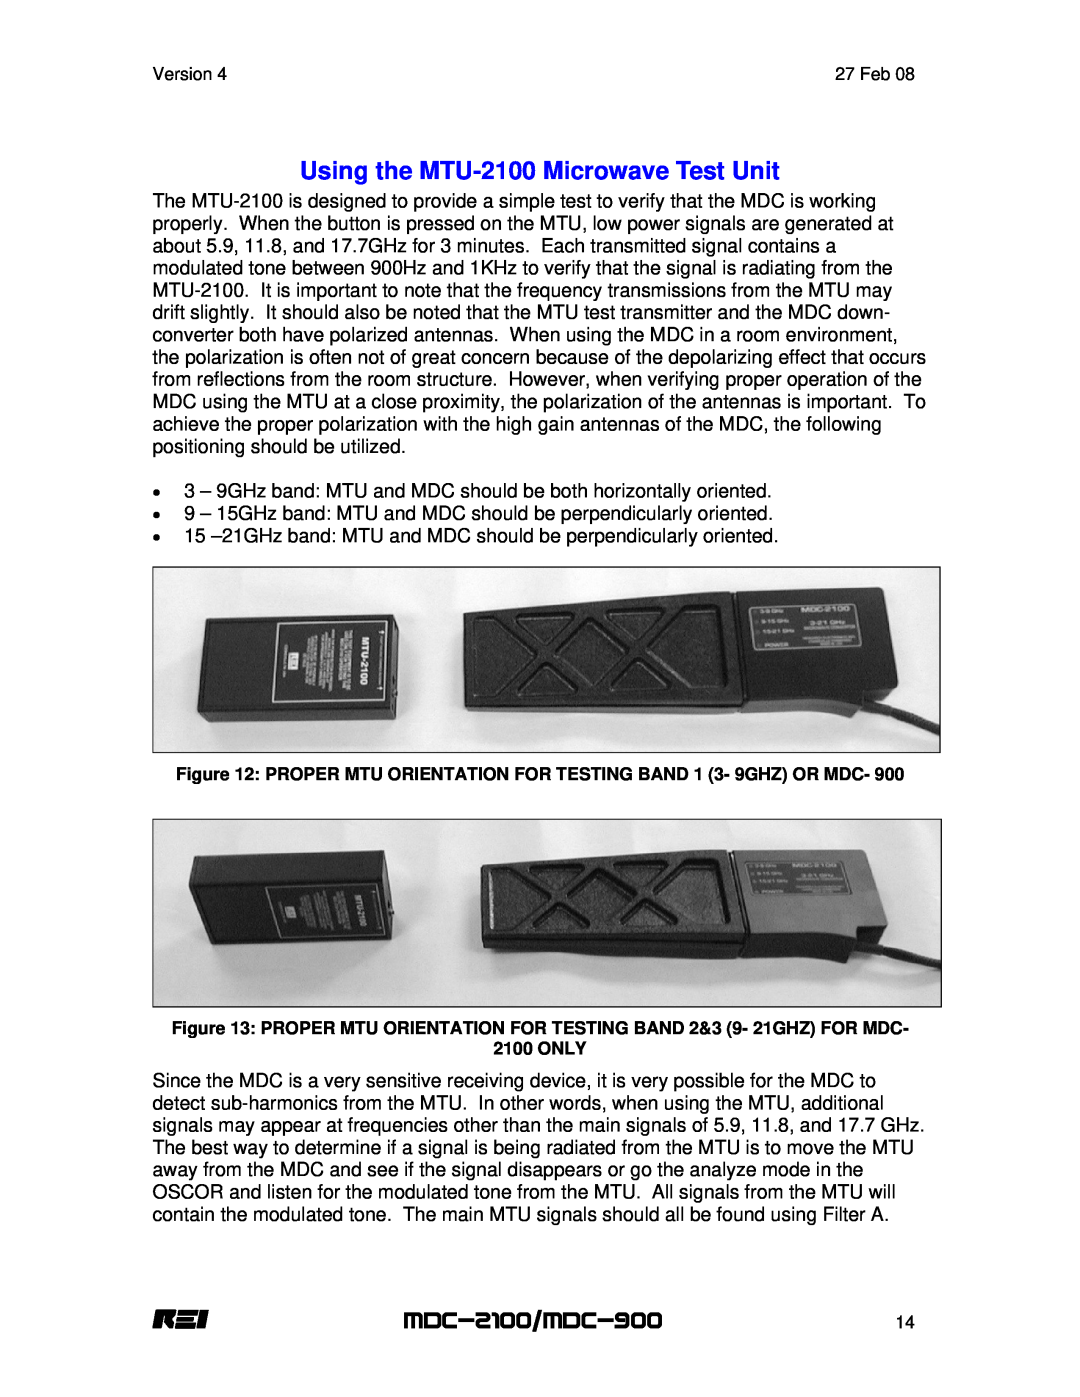 REI manual Using the MTU-2100 Microwave Test Unit, MDC-2100/MDC-900 